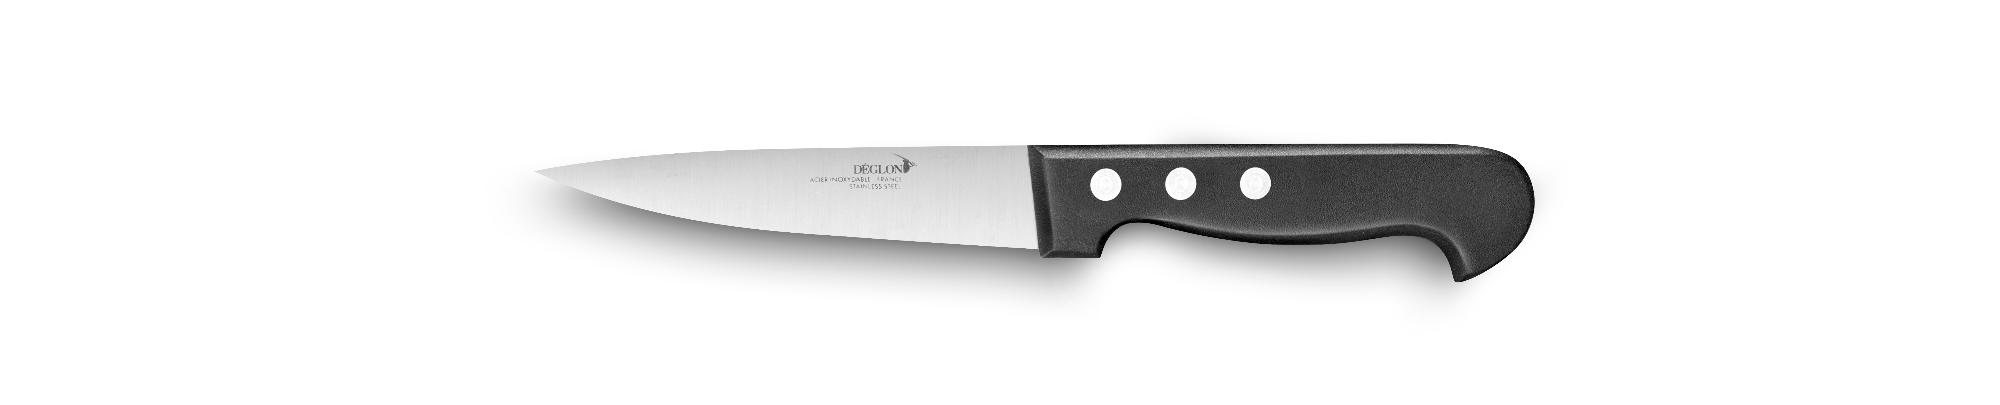 Maxifil boning knife, 140mm